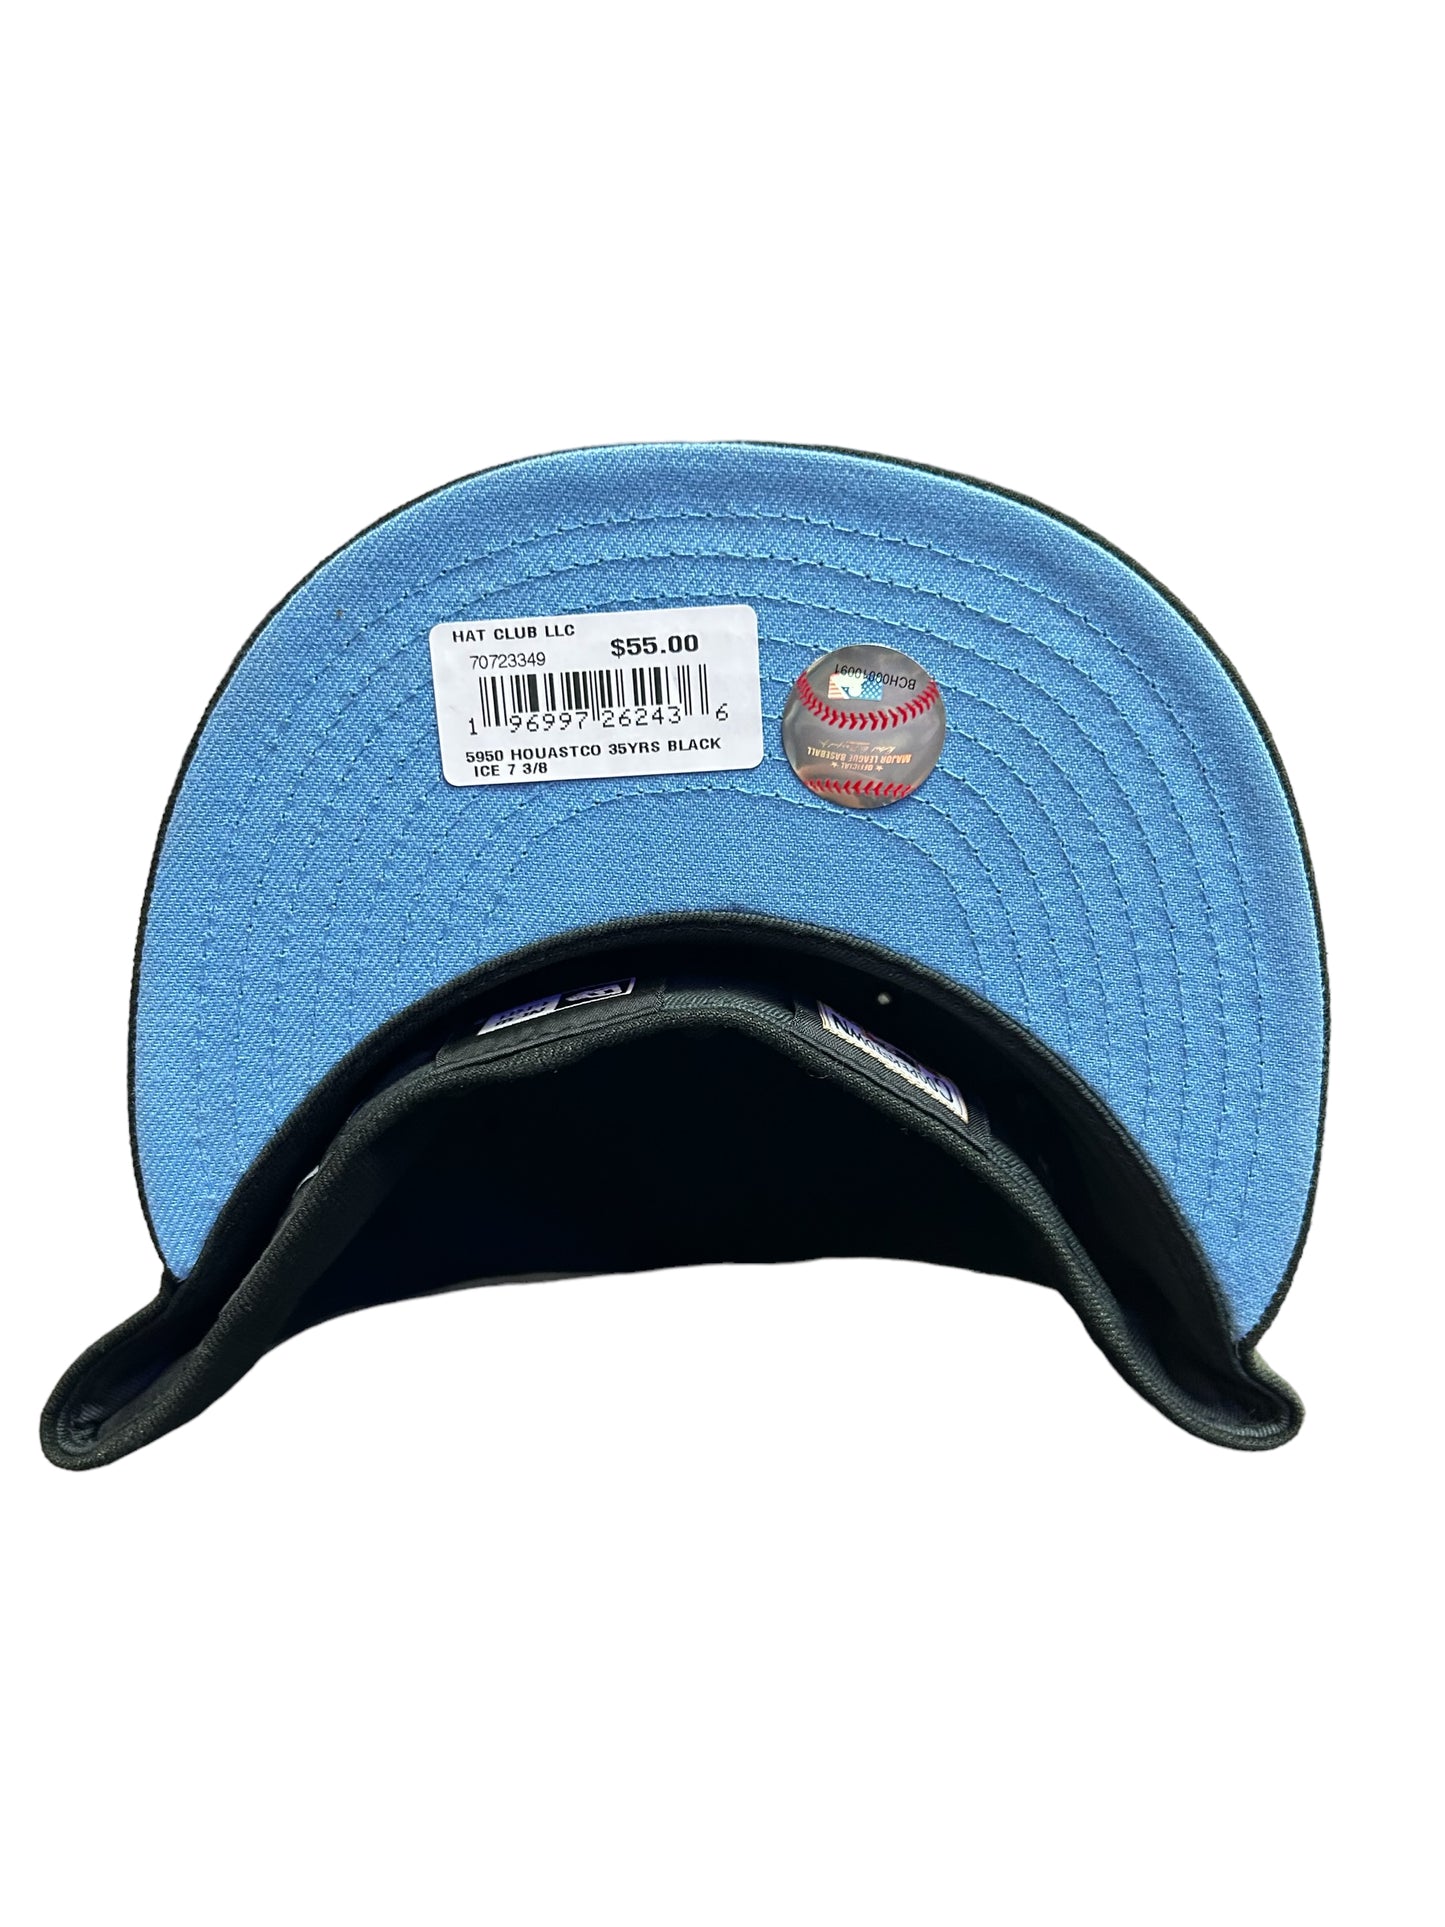 Houston Astros Black/Blue Hat